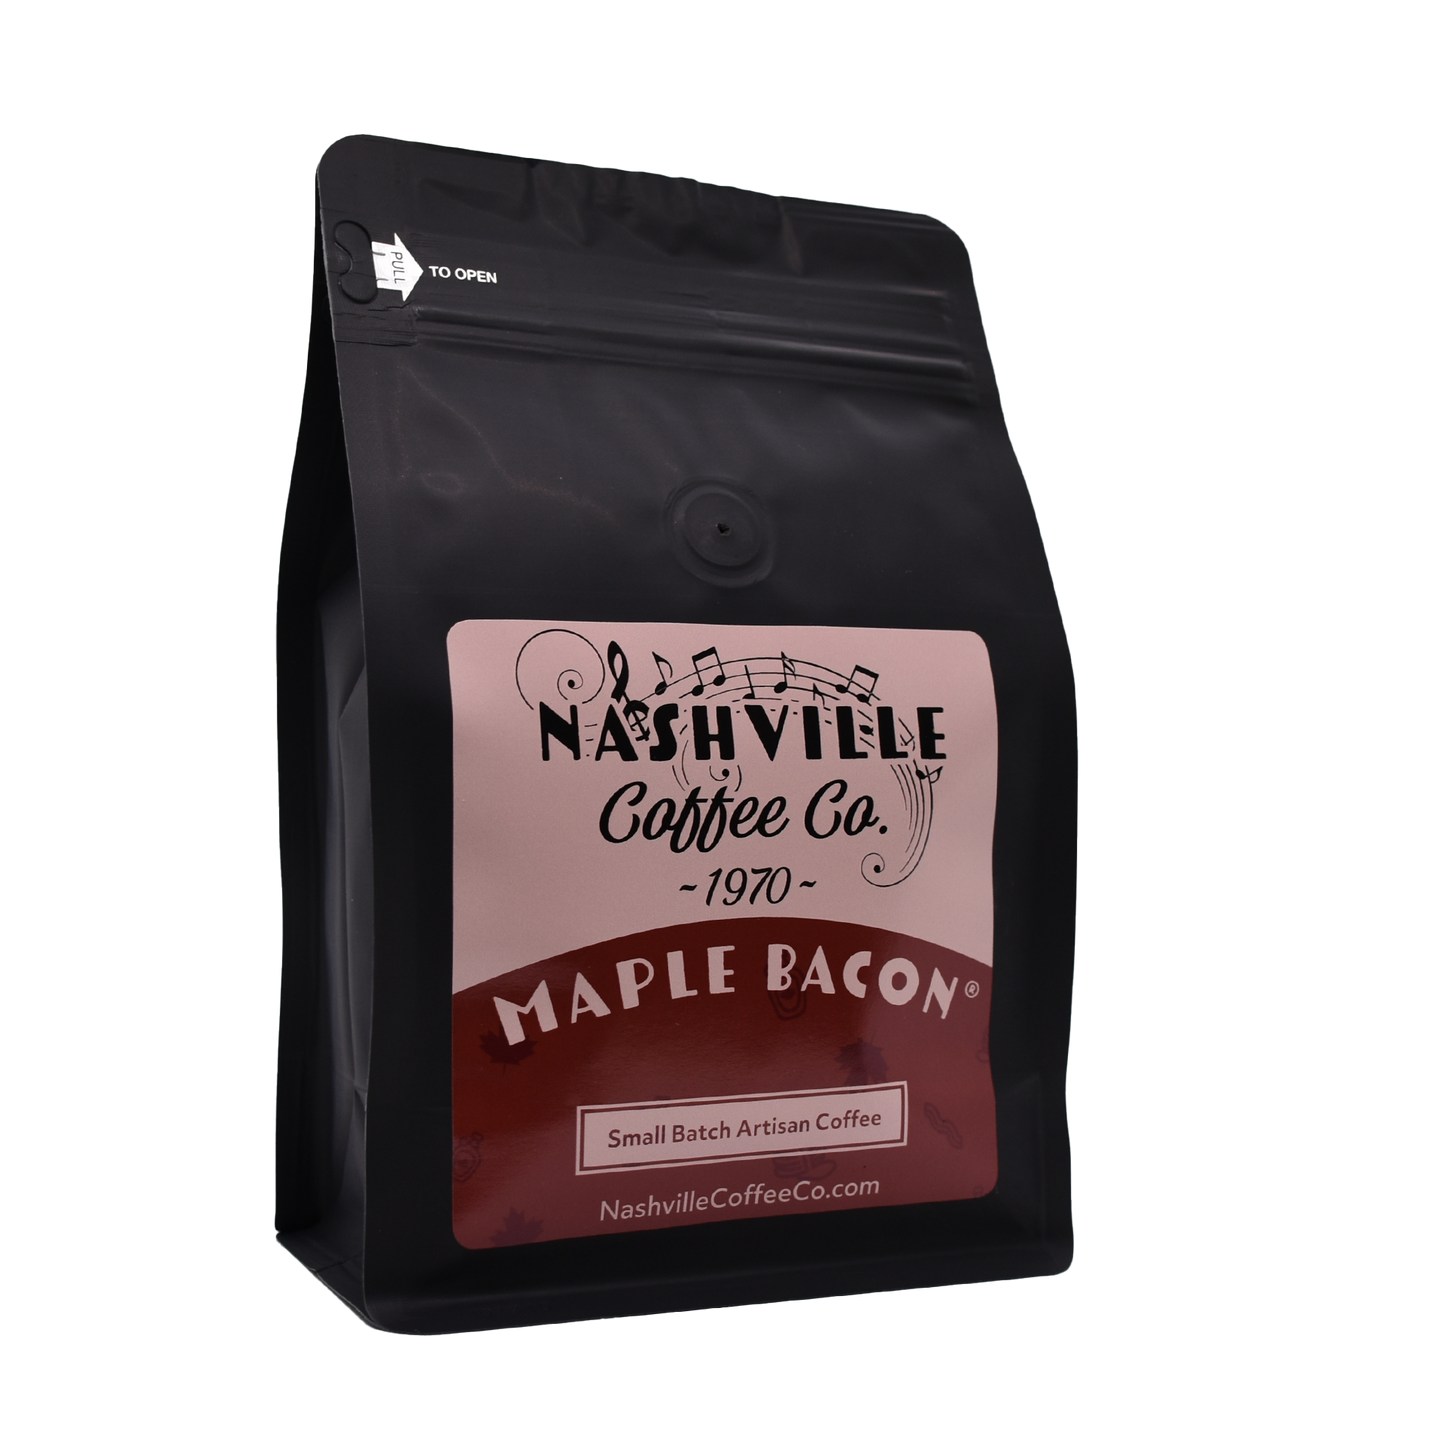 Maple Bacon® Coffee